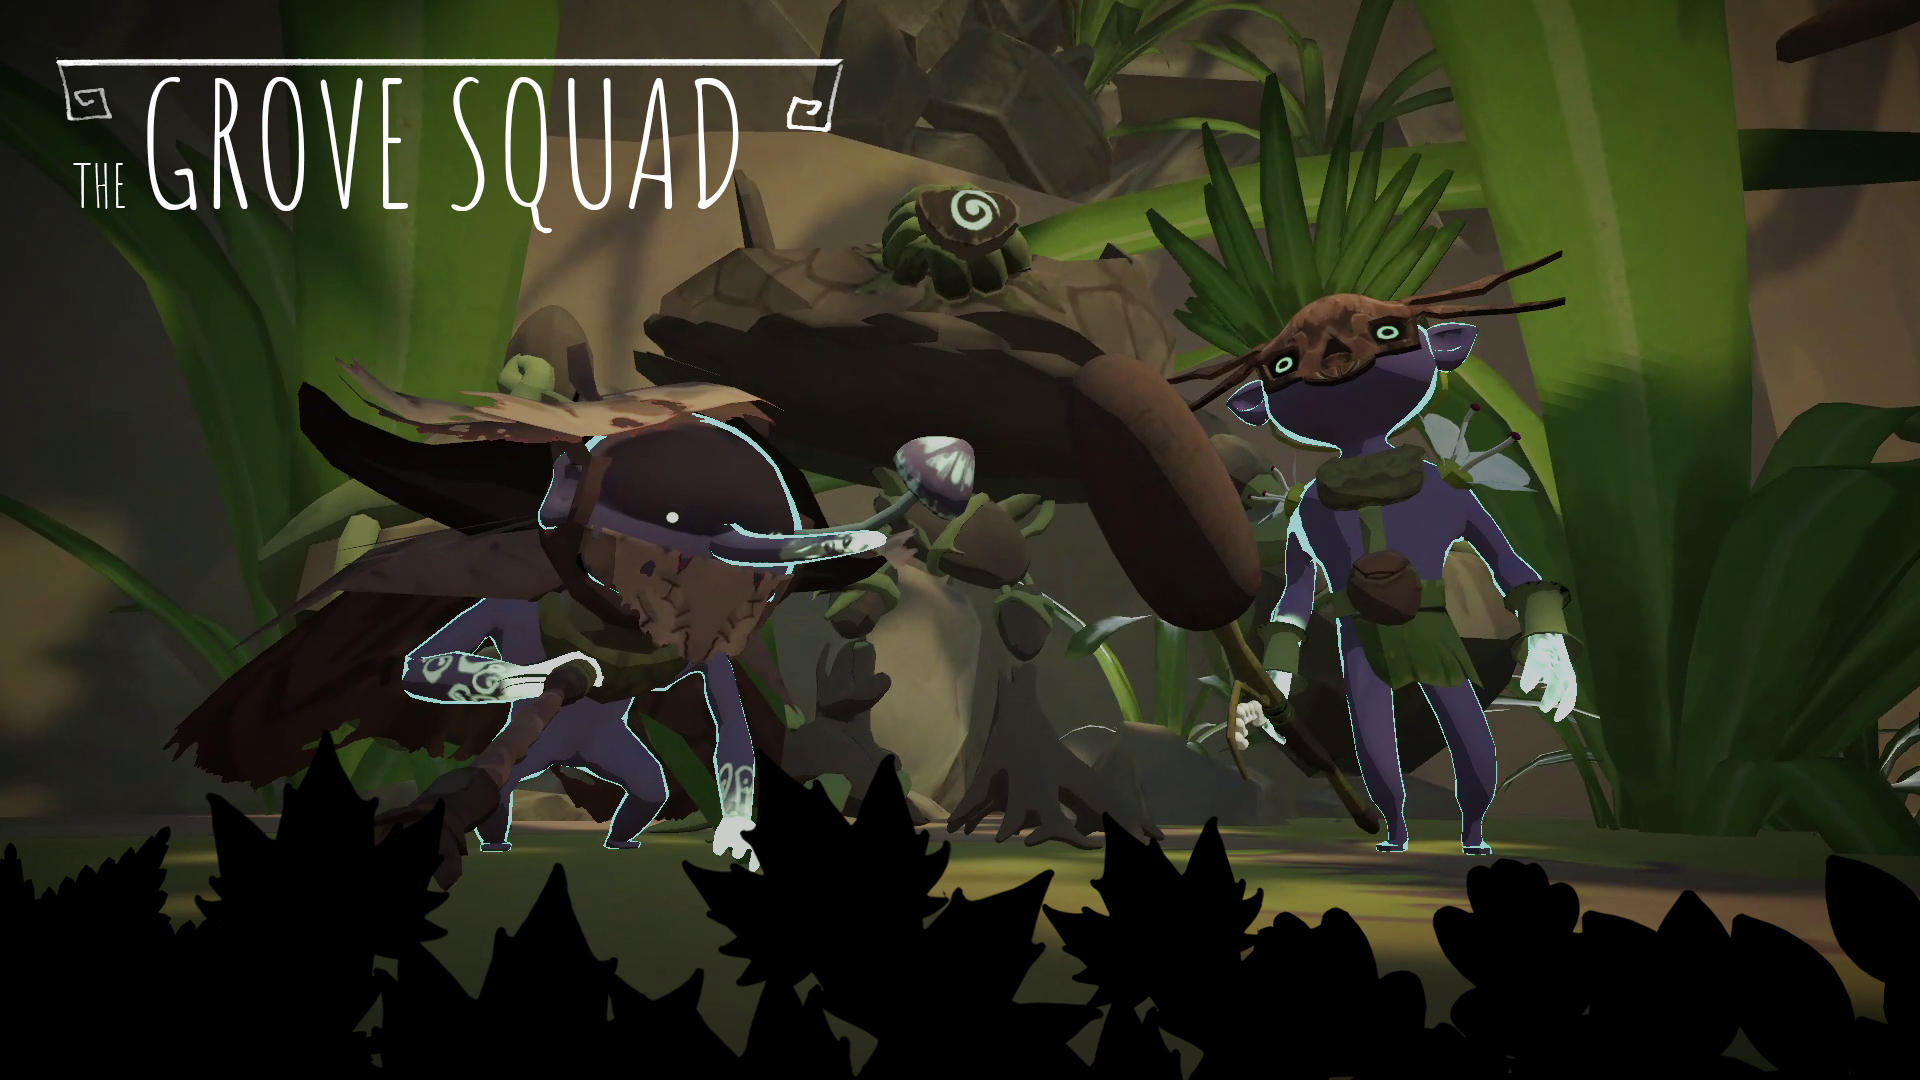 The Grove Squad